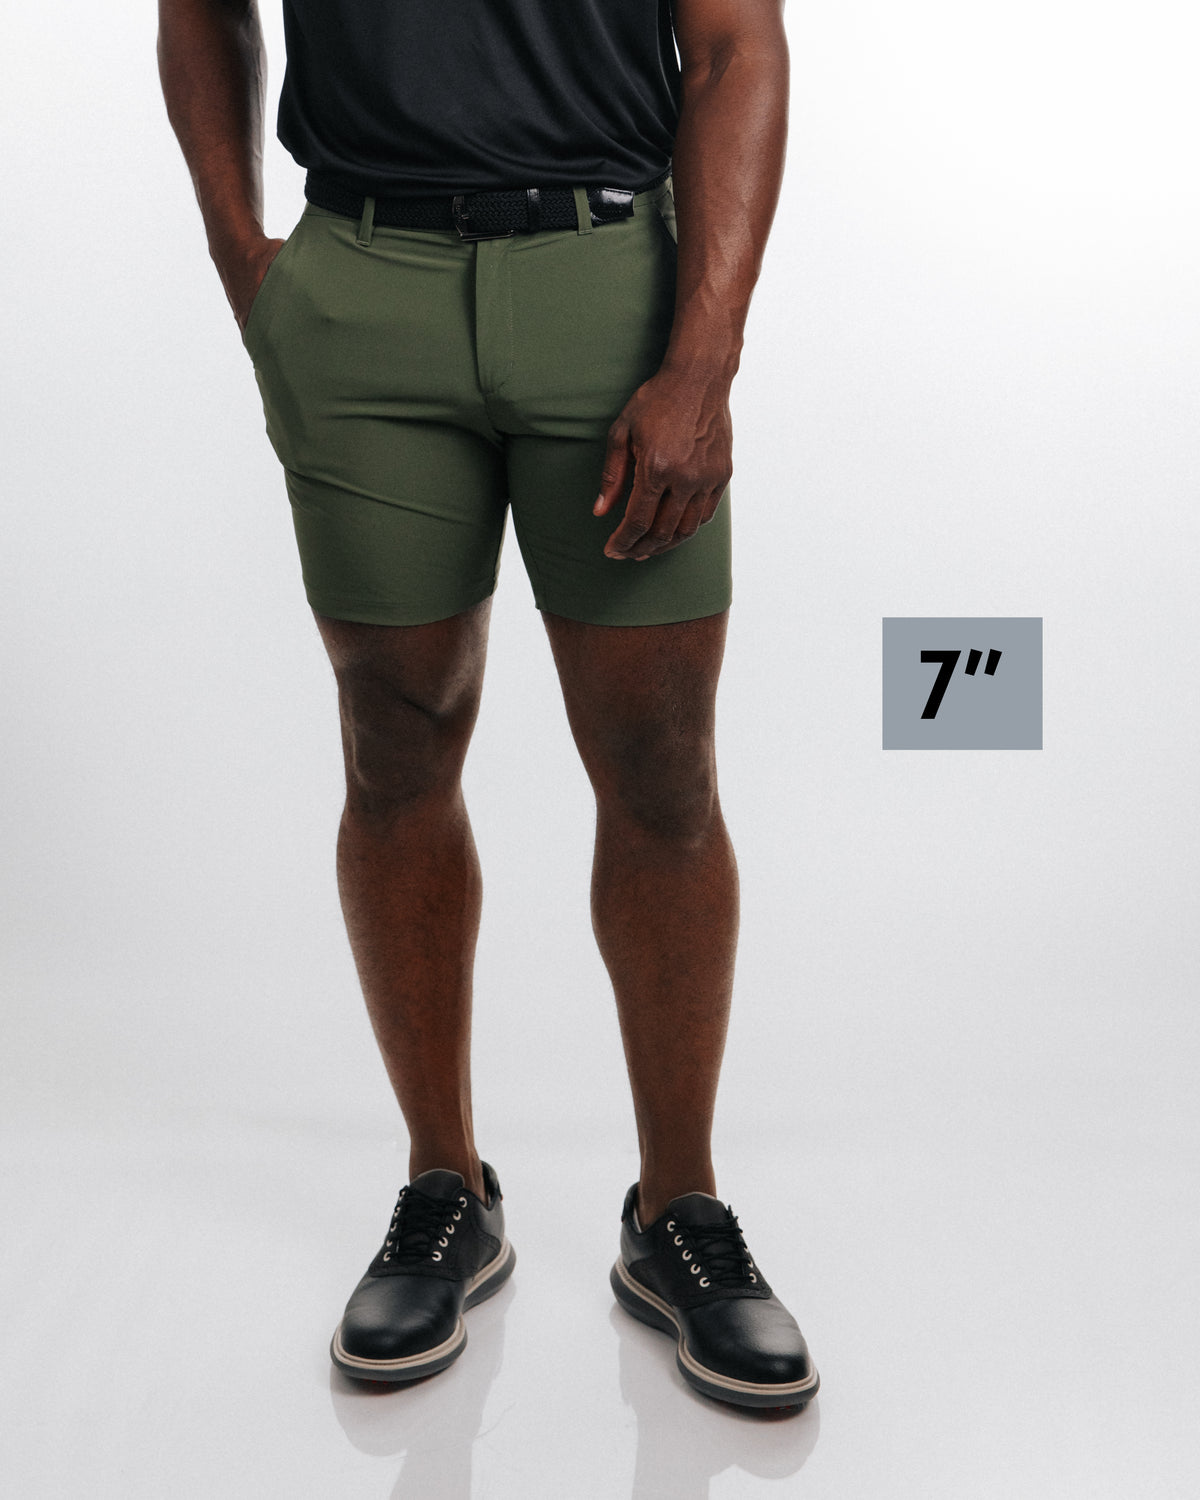 Primo Olive Shorts - 7", 9", 11"